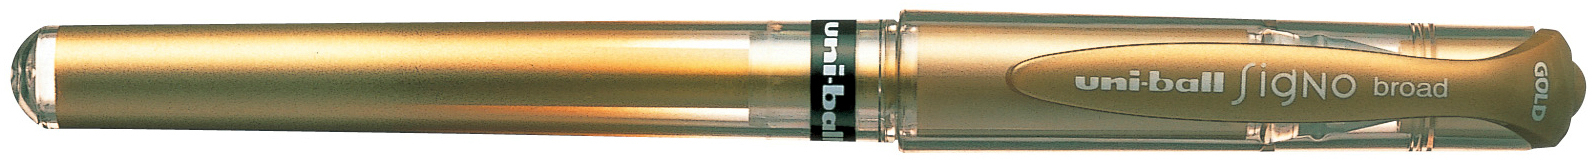 UNI-BALL Signo Broad 1mm UM-153 GOLD gold